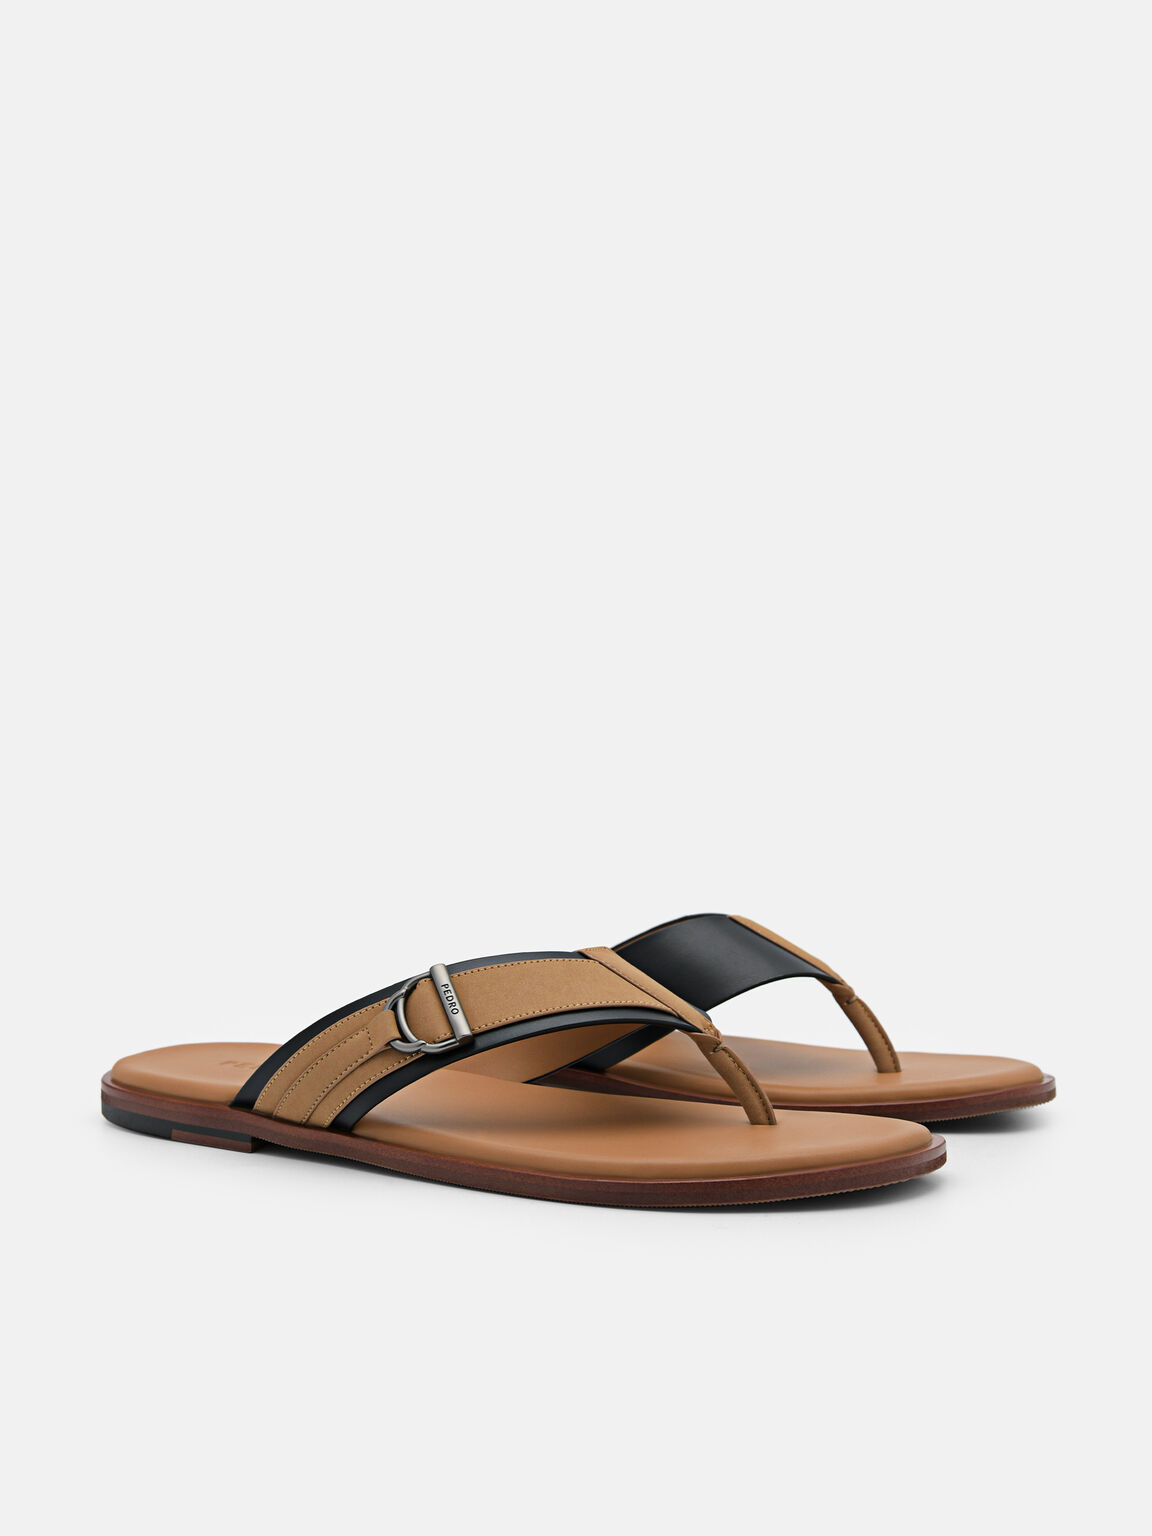 Jackson Thong Sandals, Camel